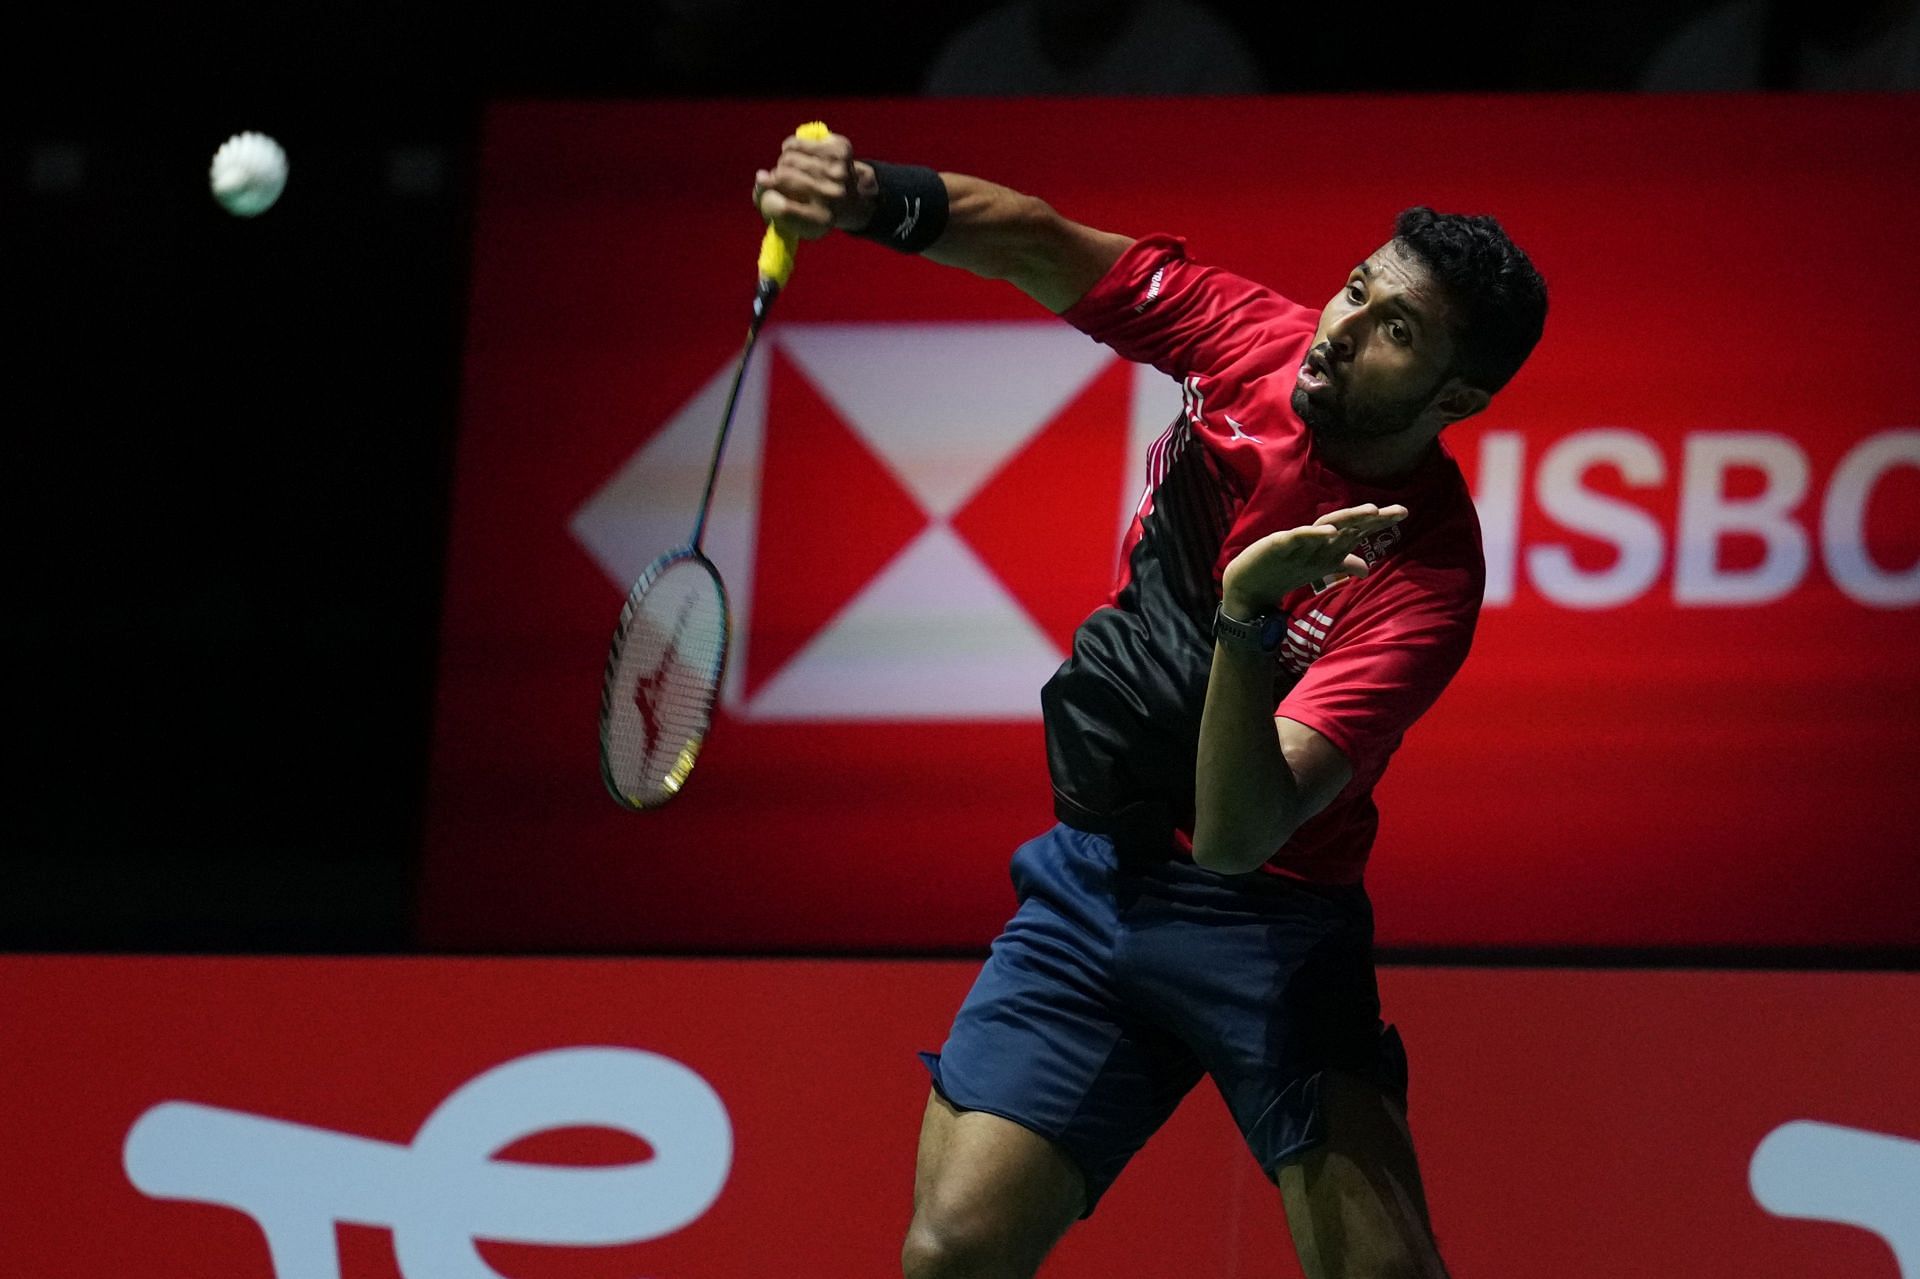 Australian Open Badminton 2023 HS Prannoy vs Priyanshu Rajawat, head-to-head, prediction, where to watch and live streaming details